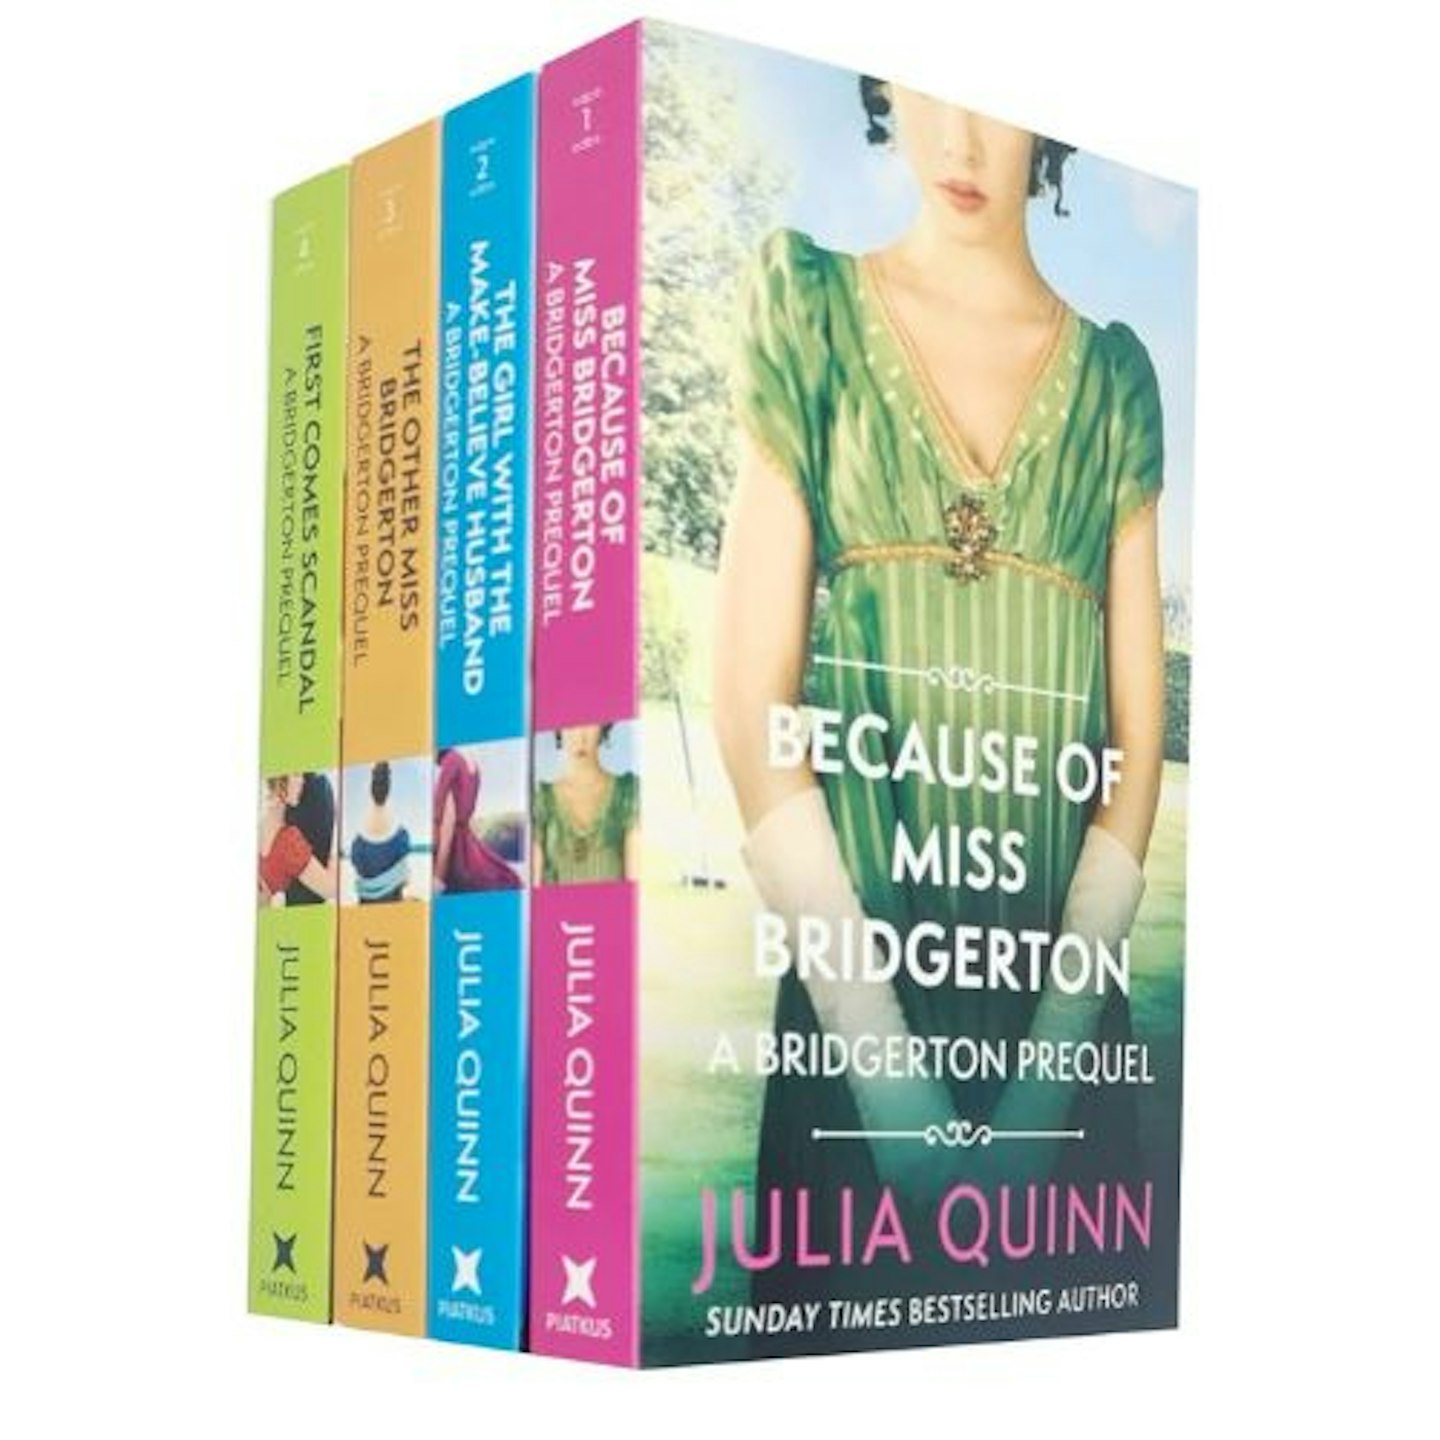 The Rokesbys Bridgerton Prequels Series Books 1 - 4 Collection by Julia Quinn